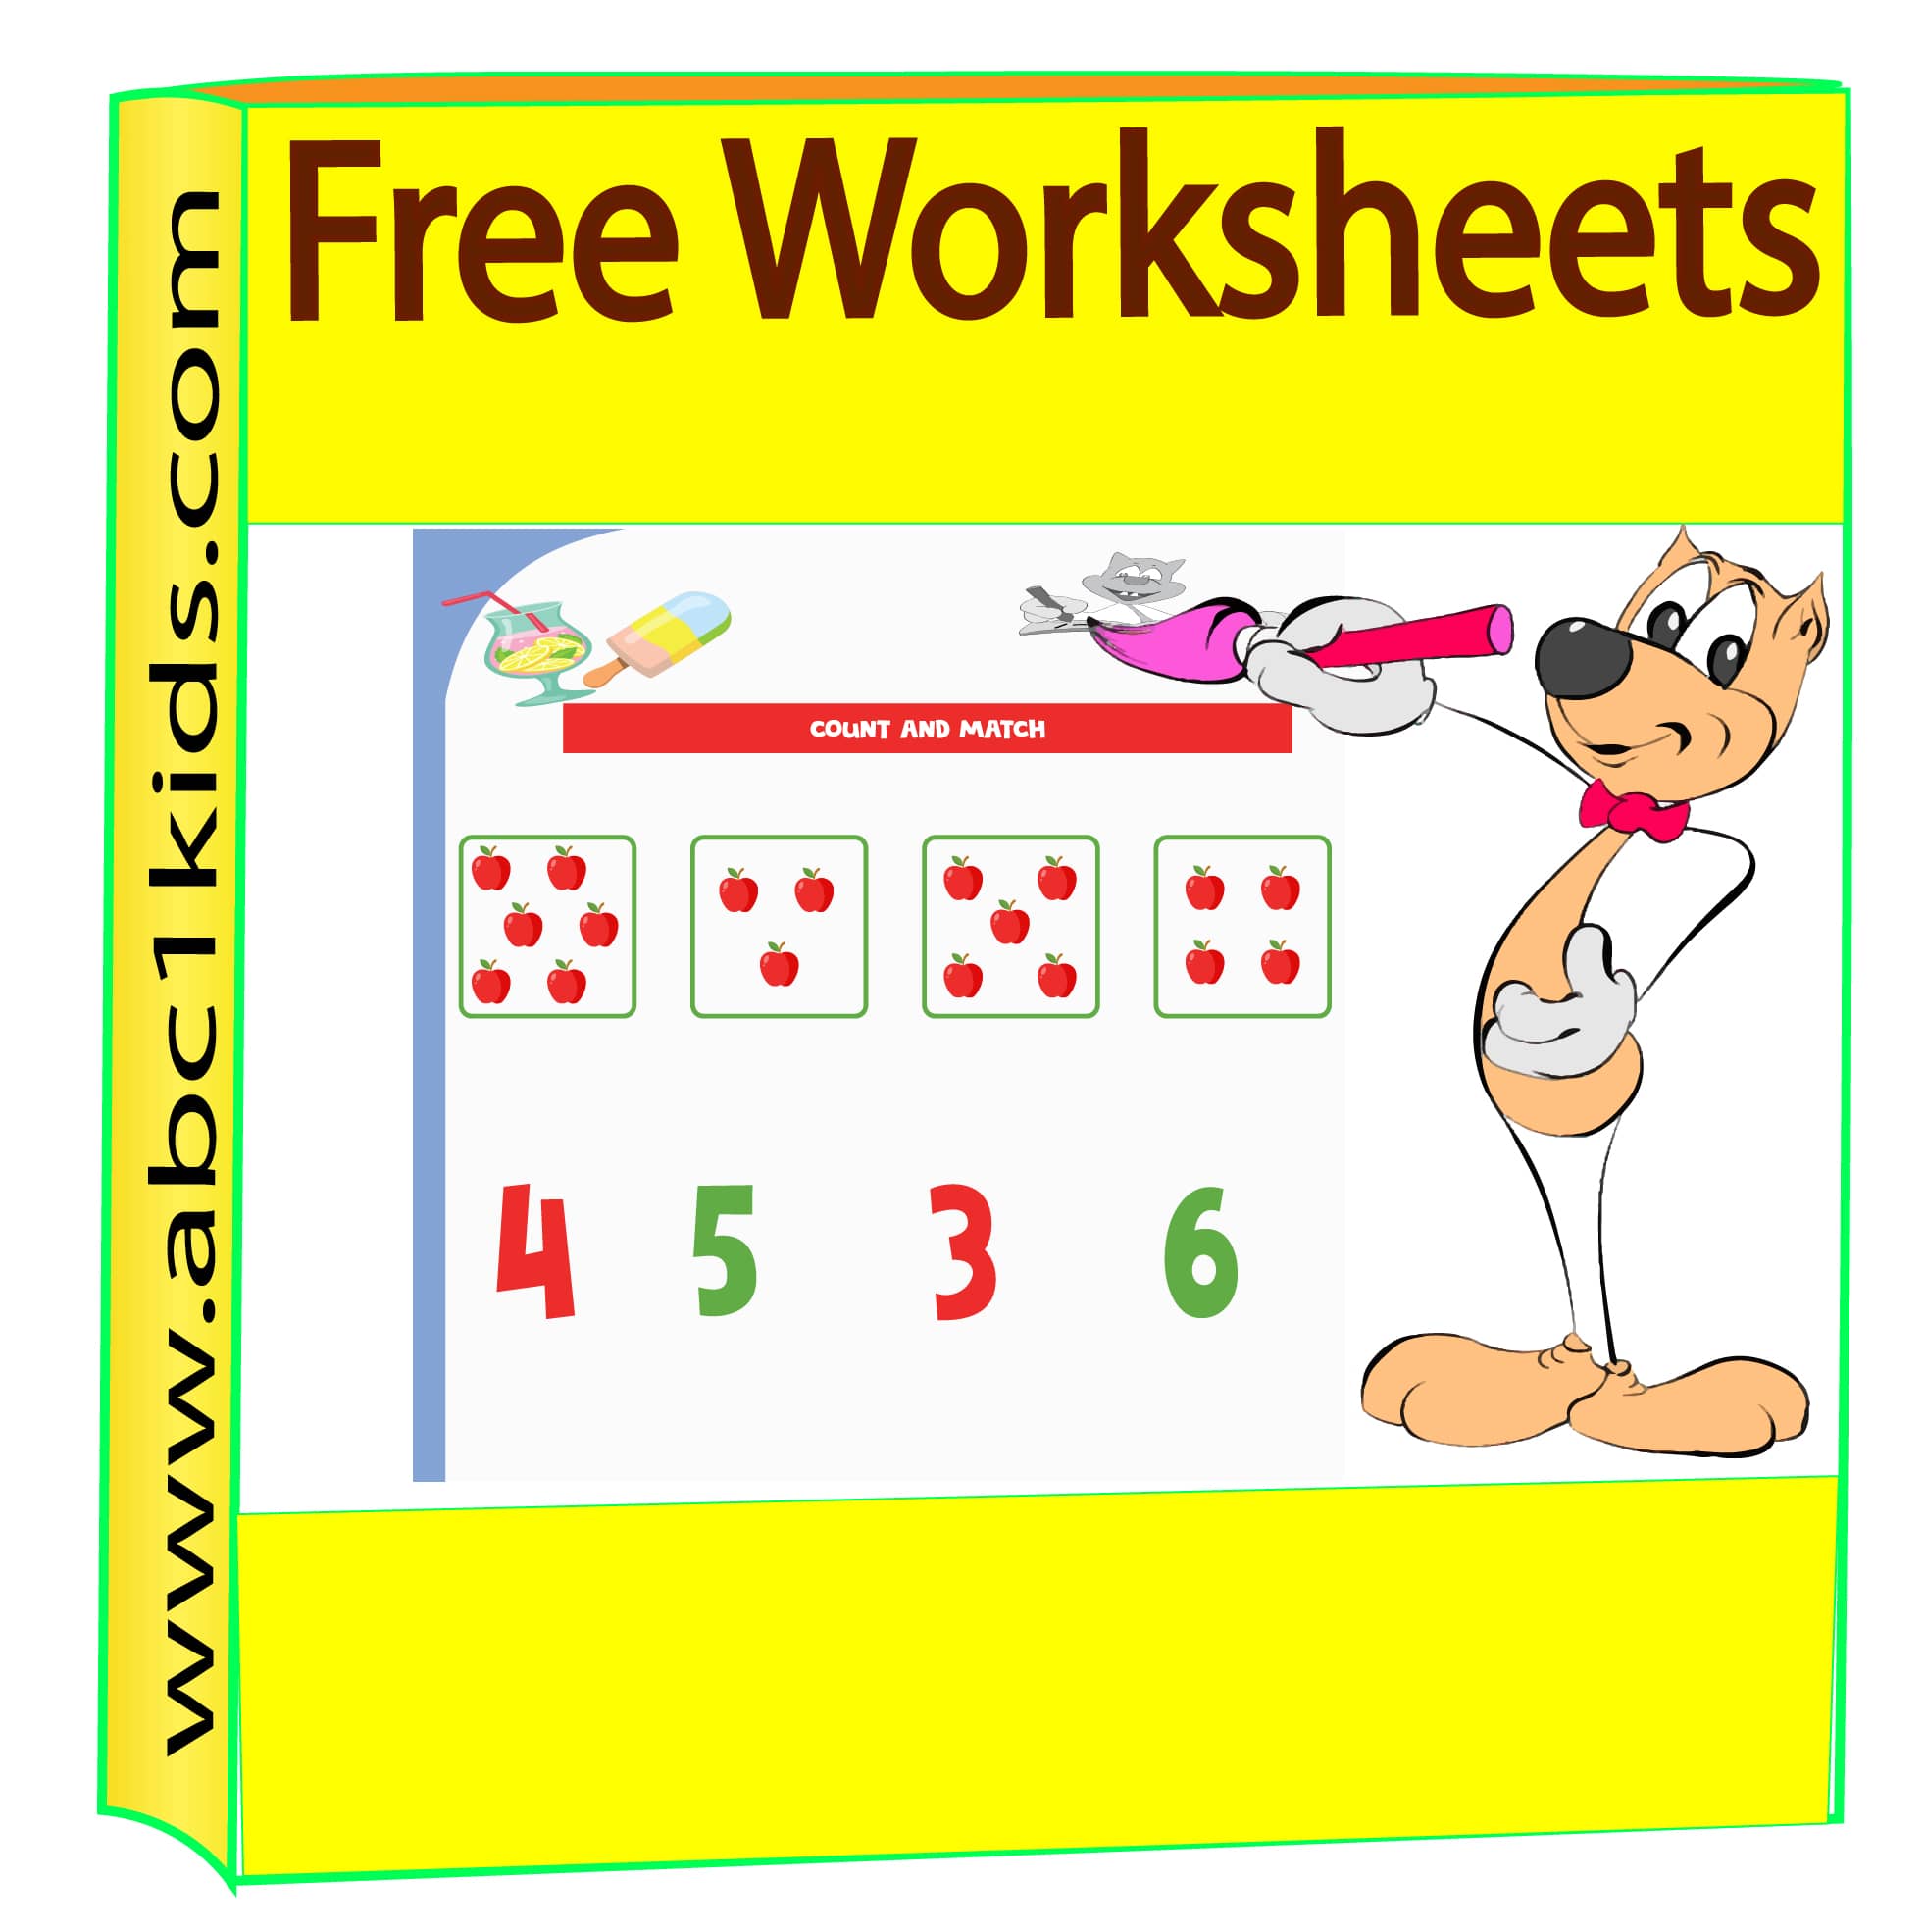 Free Worksheets